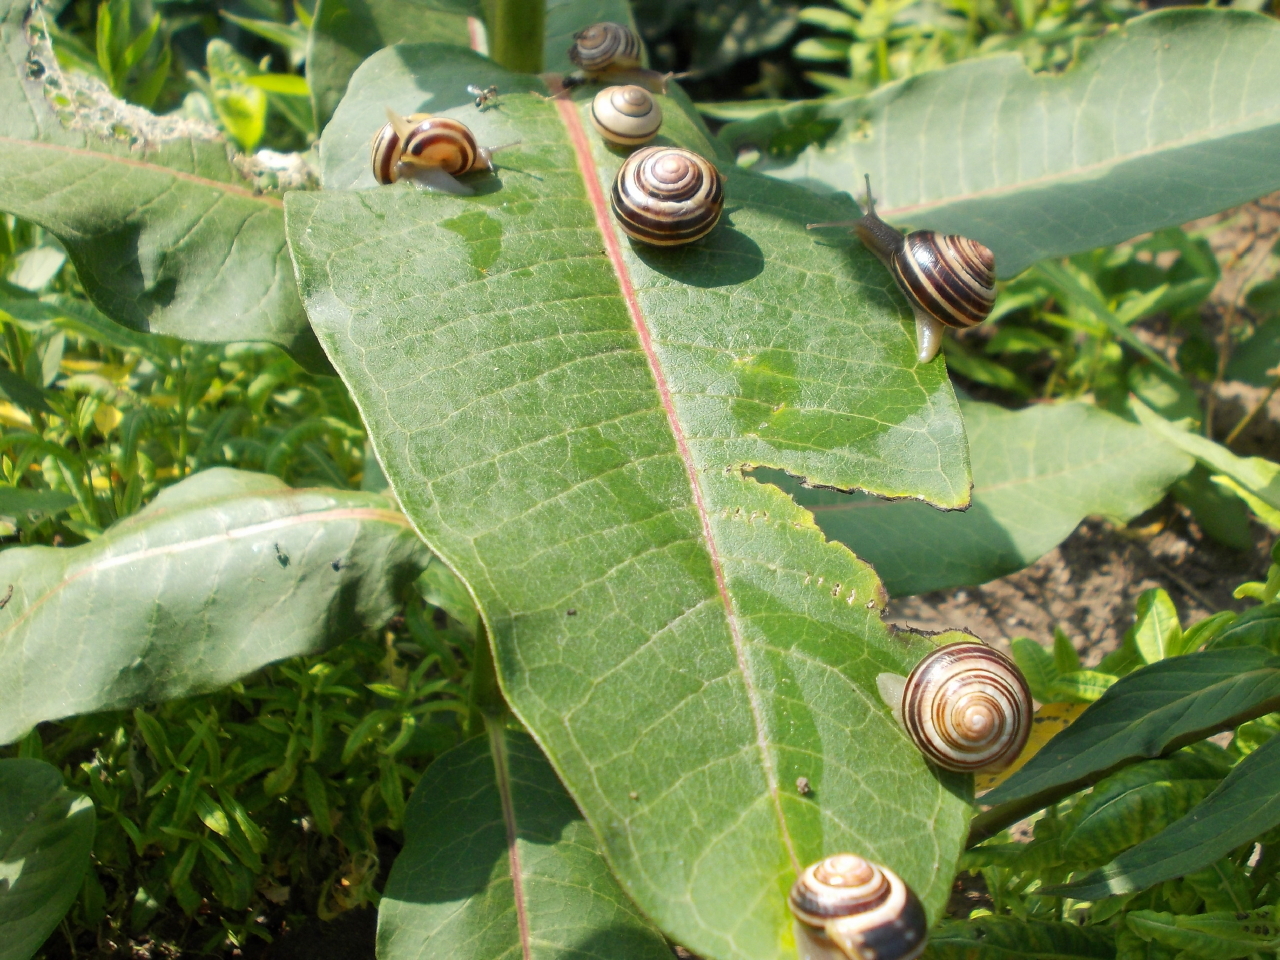 Honourable Mention Emerald – “Snails On Leaf” by James Scafer